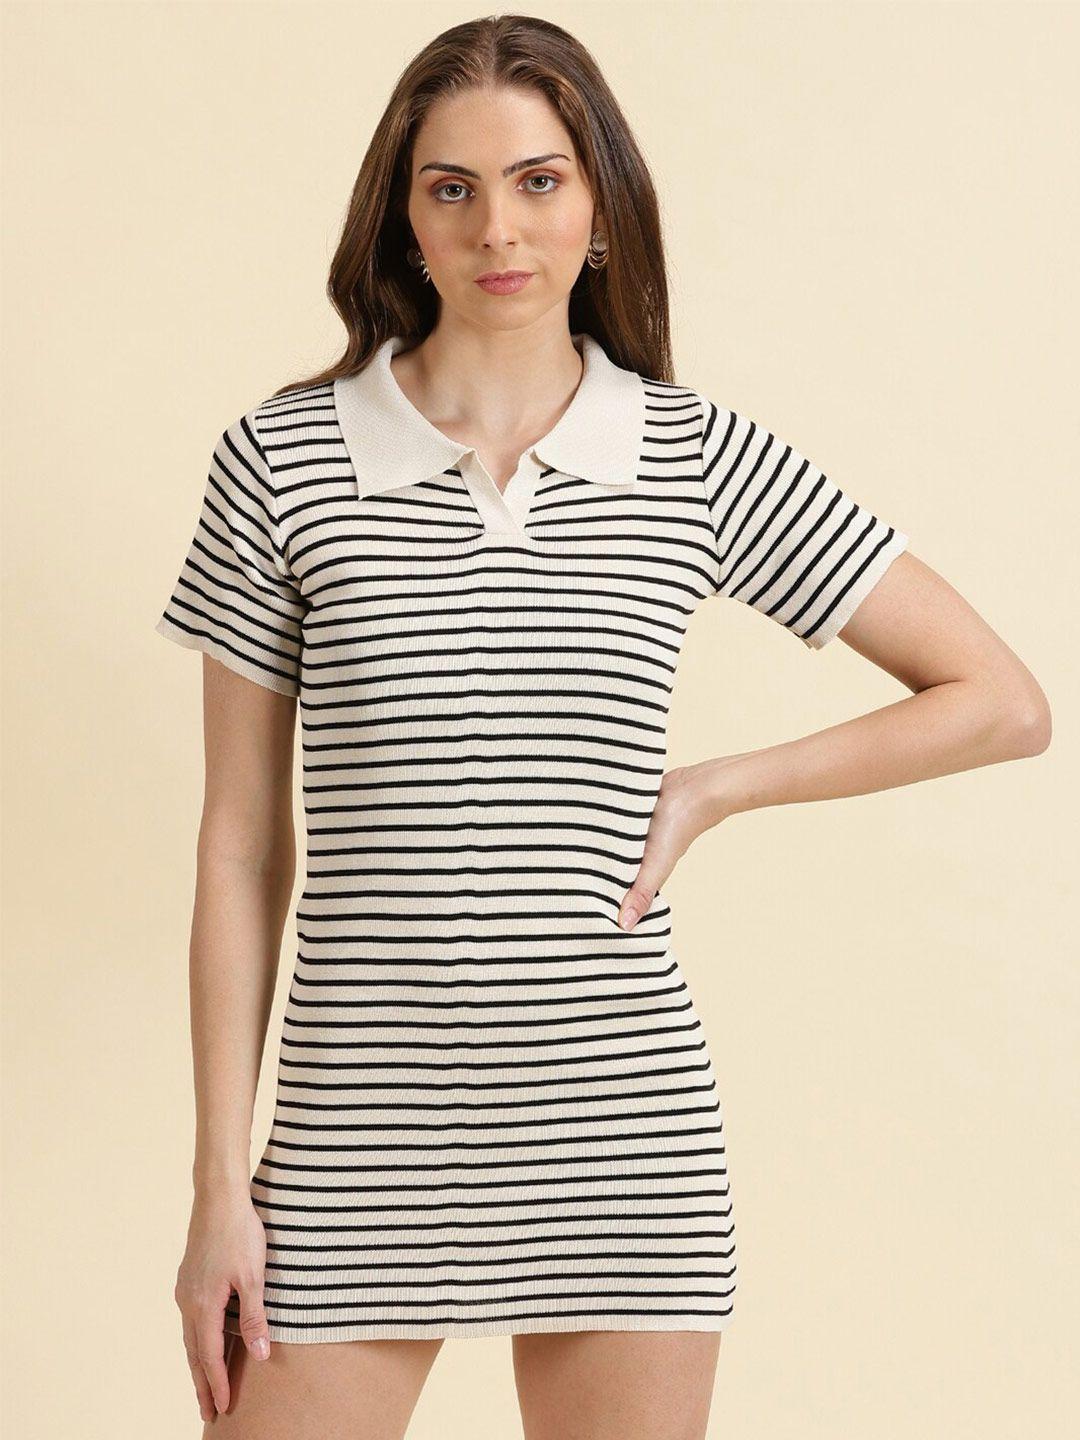 showoff-shirt-collar-striped-t-shirt-dress